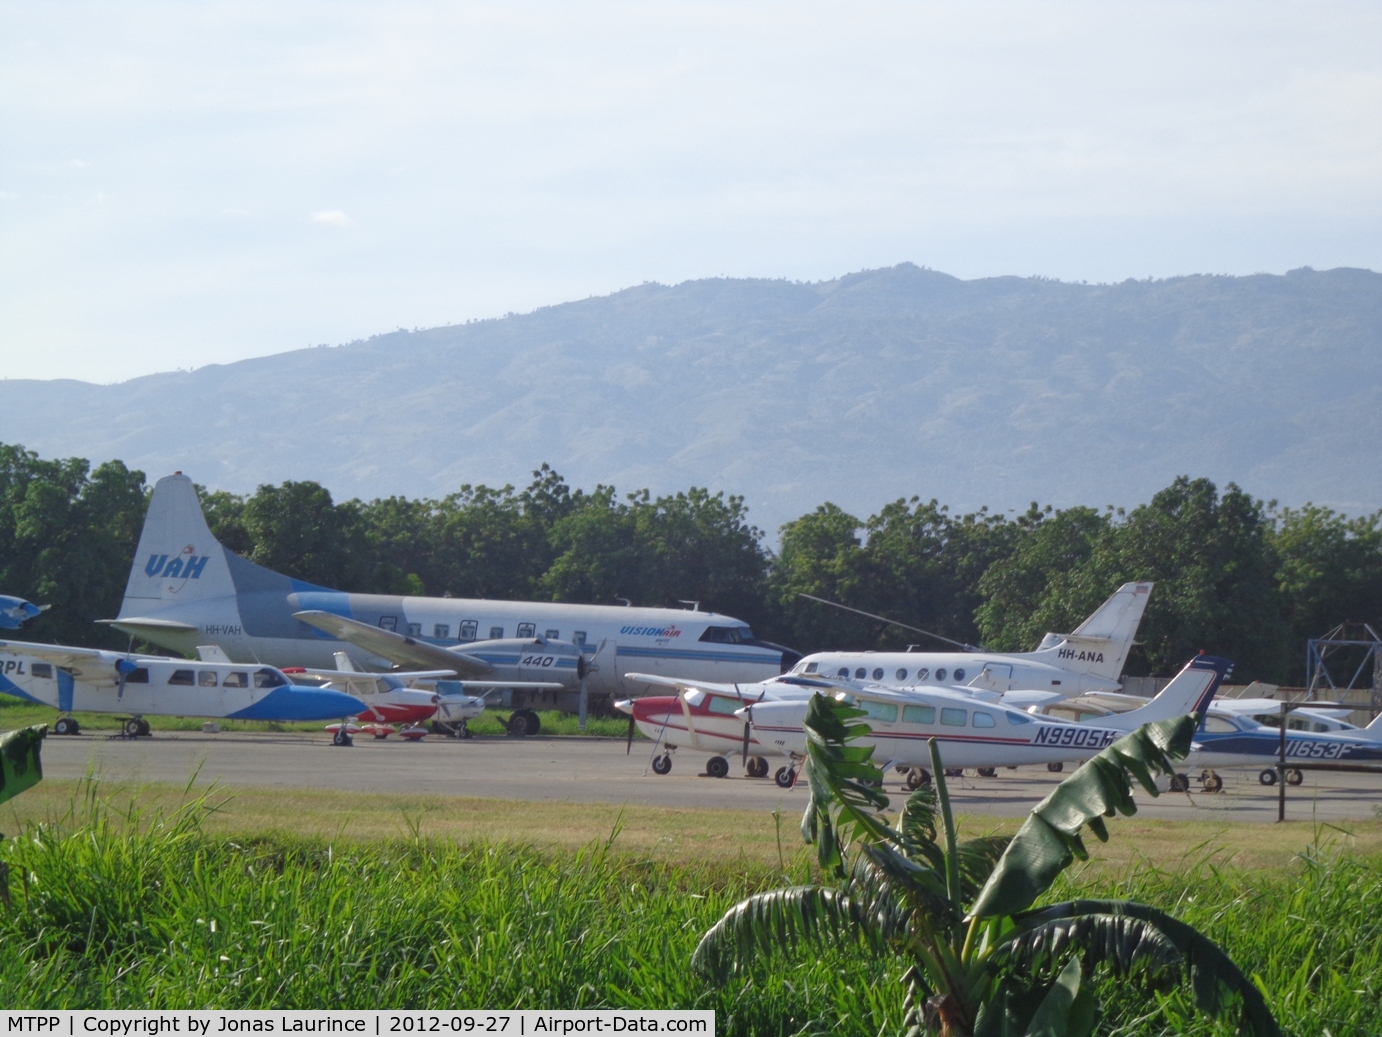 Port-au-Prince International Airport (Toussaint Louverture Int'l), Port-au-Prince Haiti (MTPP) - Aircrafts at the Guy Malary regional flights Terminal, at Toussaint Louverture International Airport of Port-au-Prince 